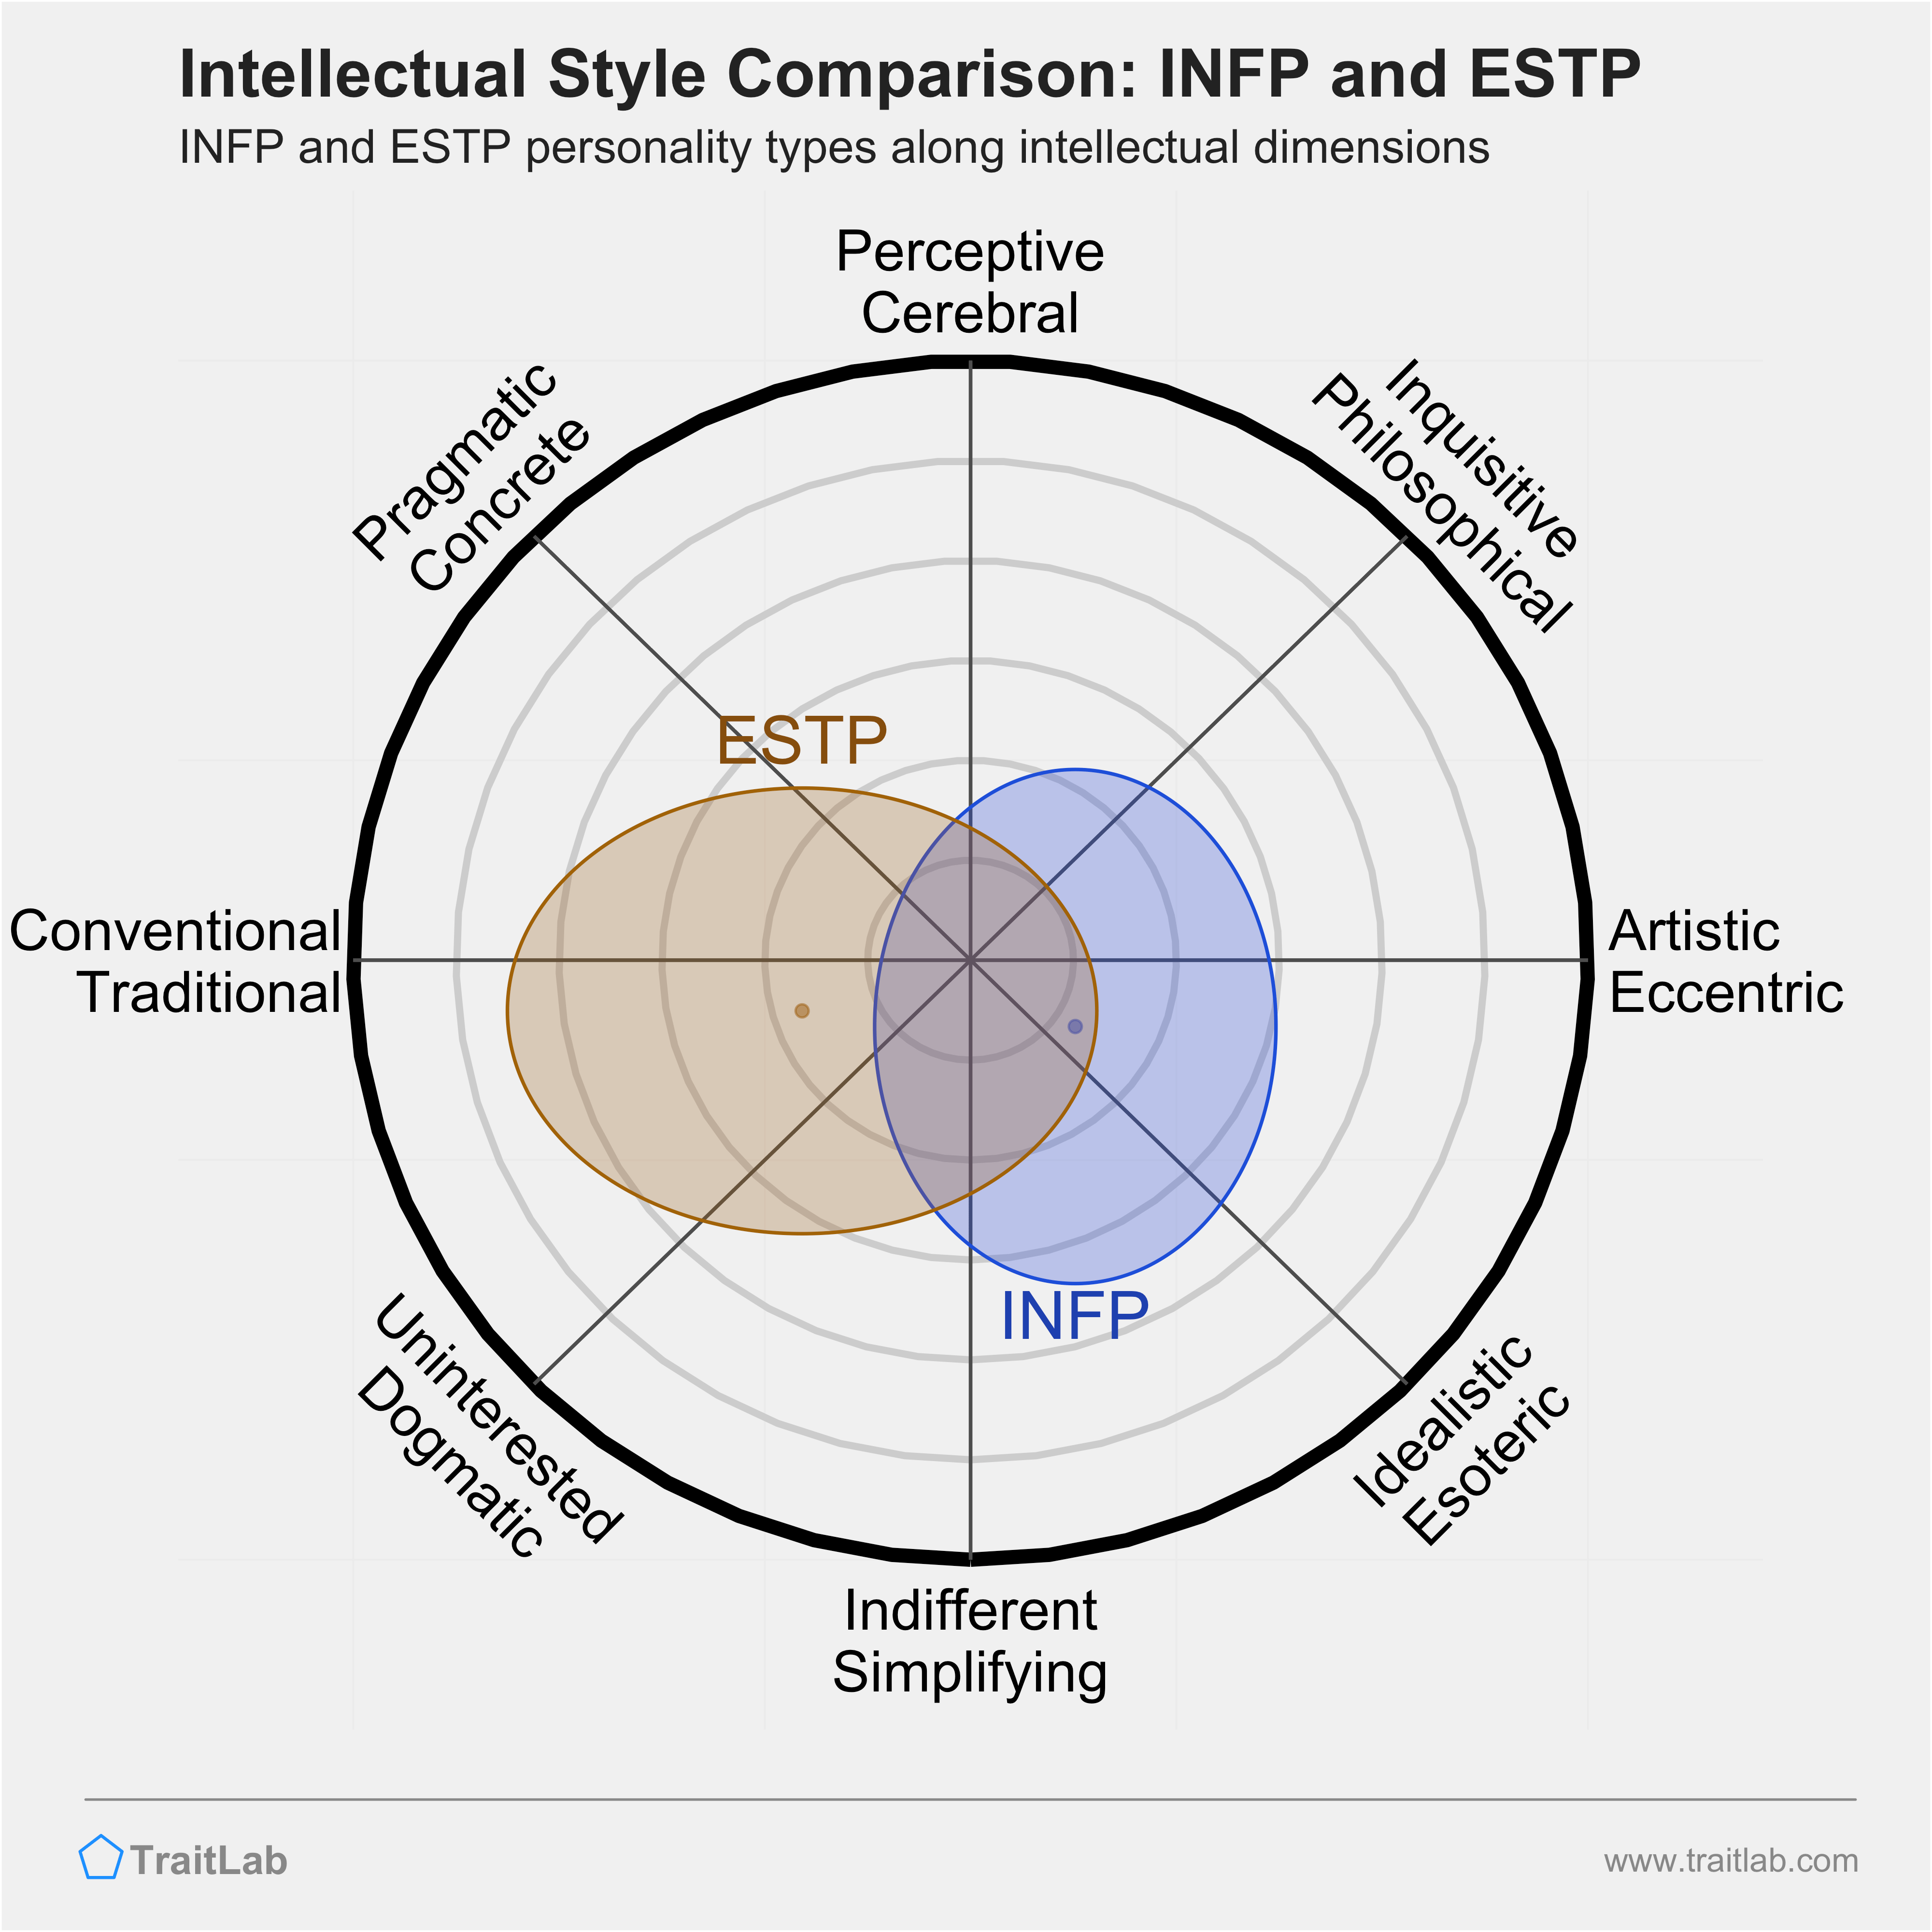 INFP and ESTP comparison across intellectual dimensions